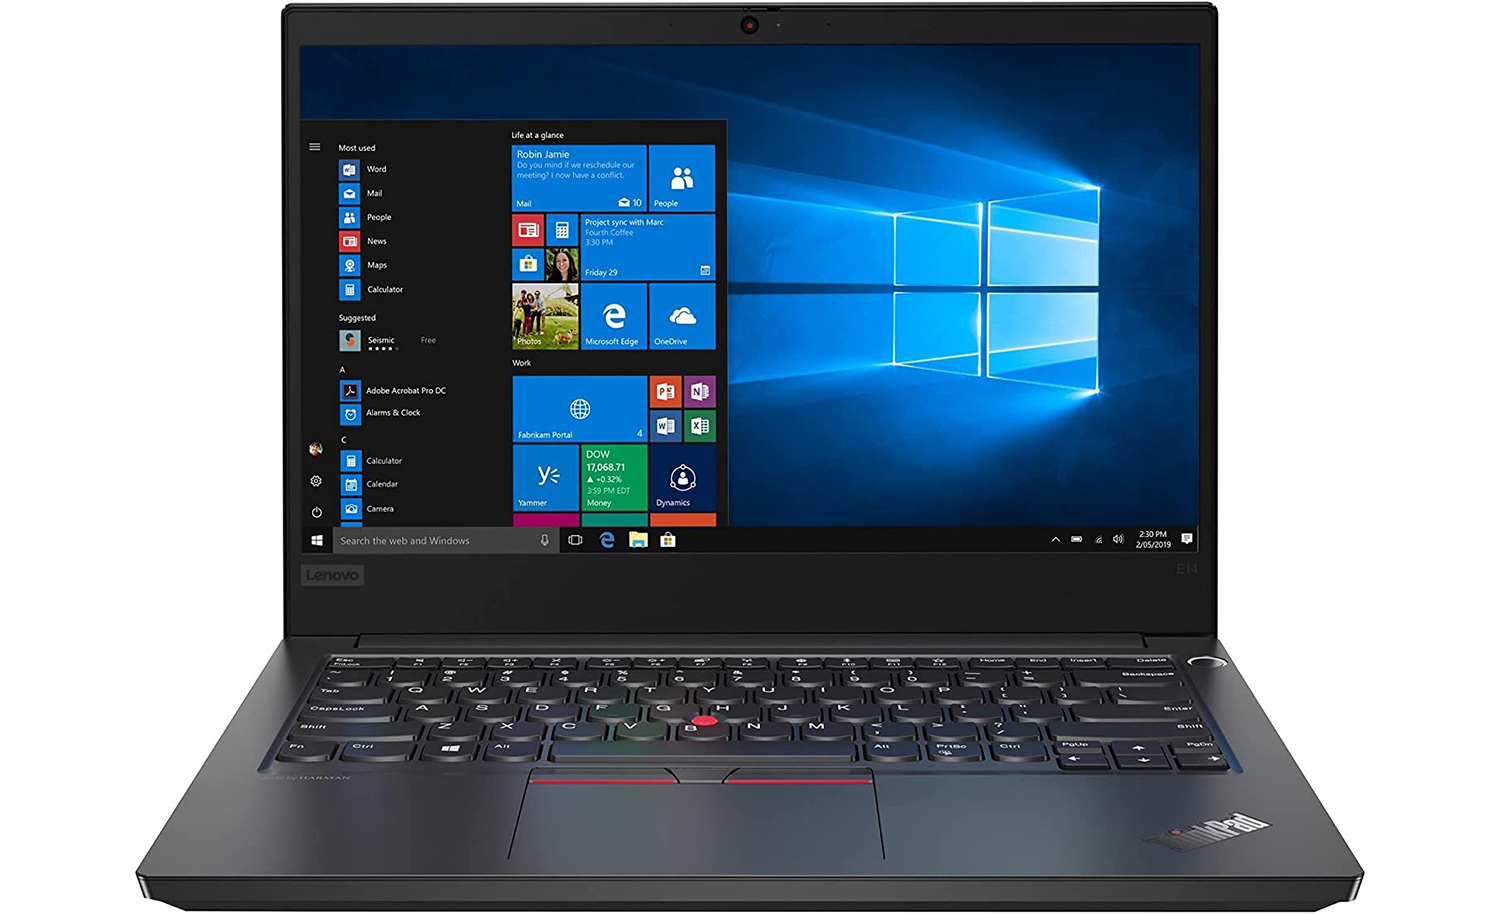 Lenovo ThinkPad E14 Intel Core i5 10th Gen 8GB RAM 1TB HDD Windows 10 Pro